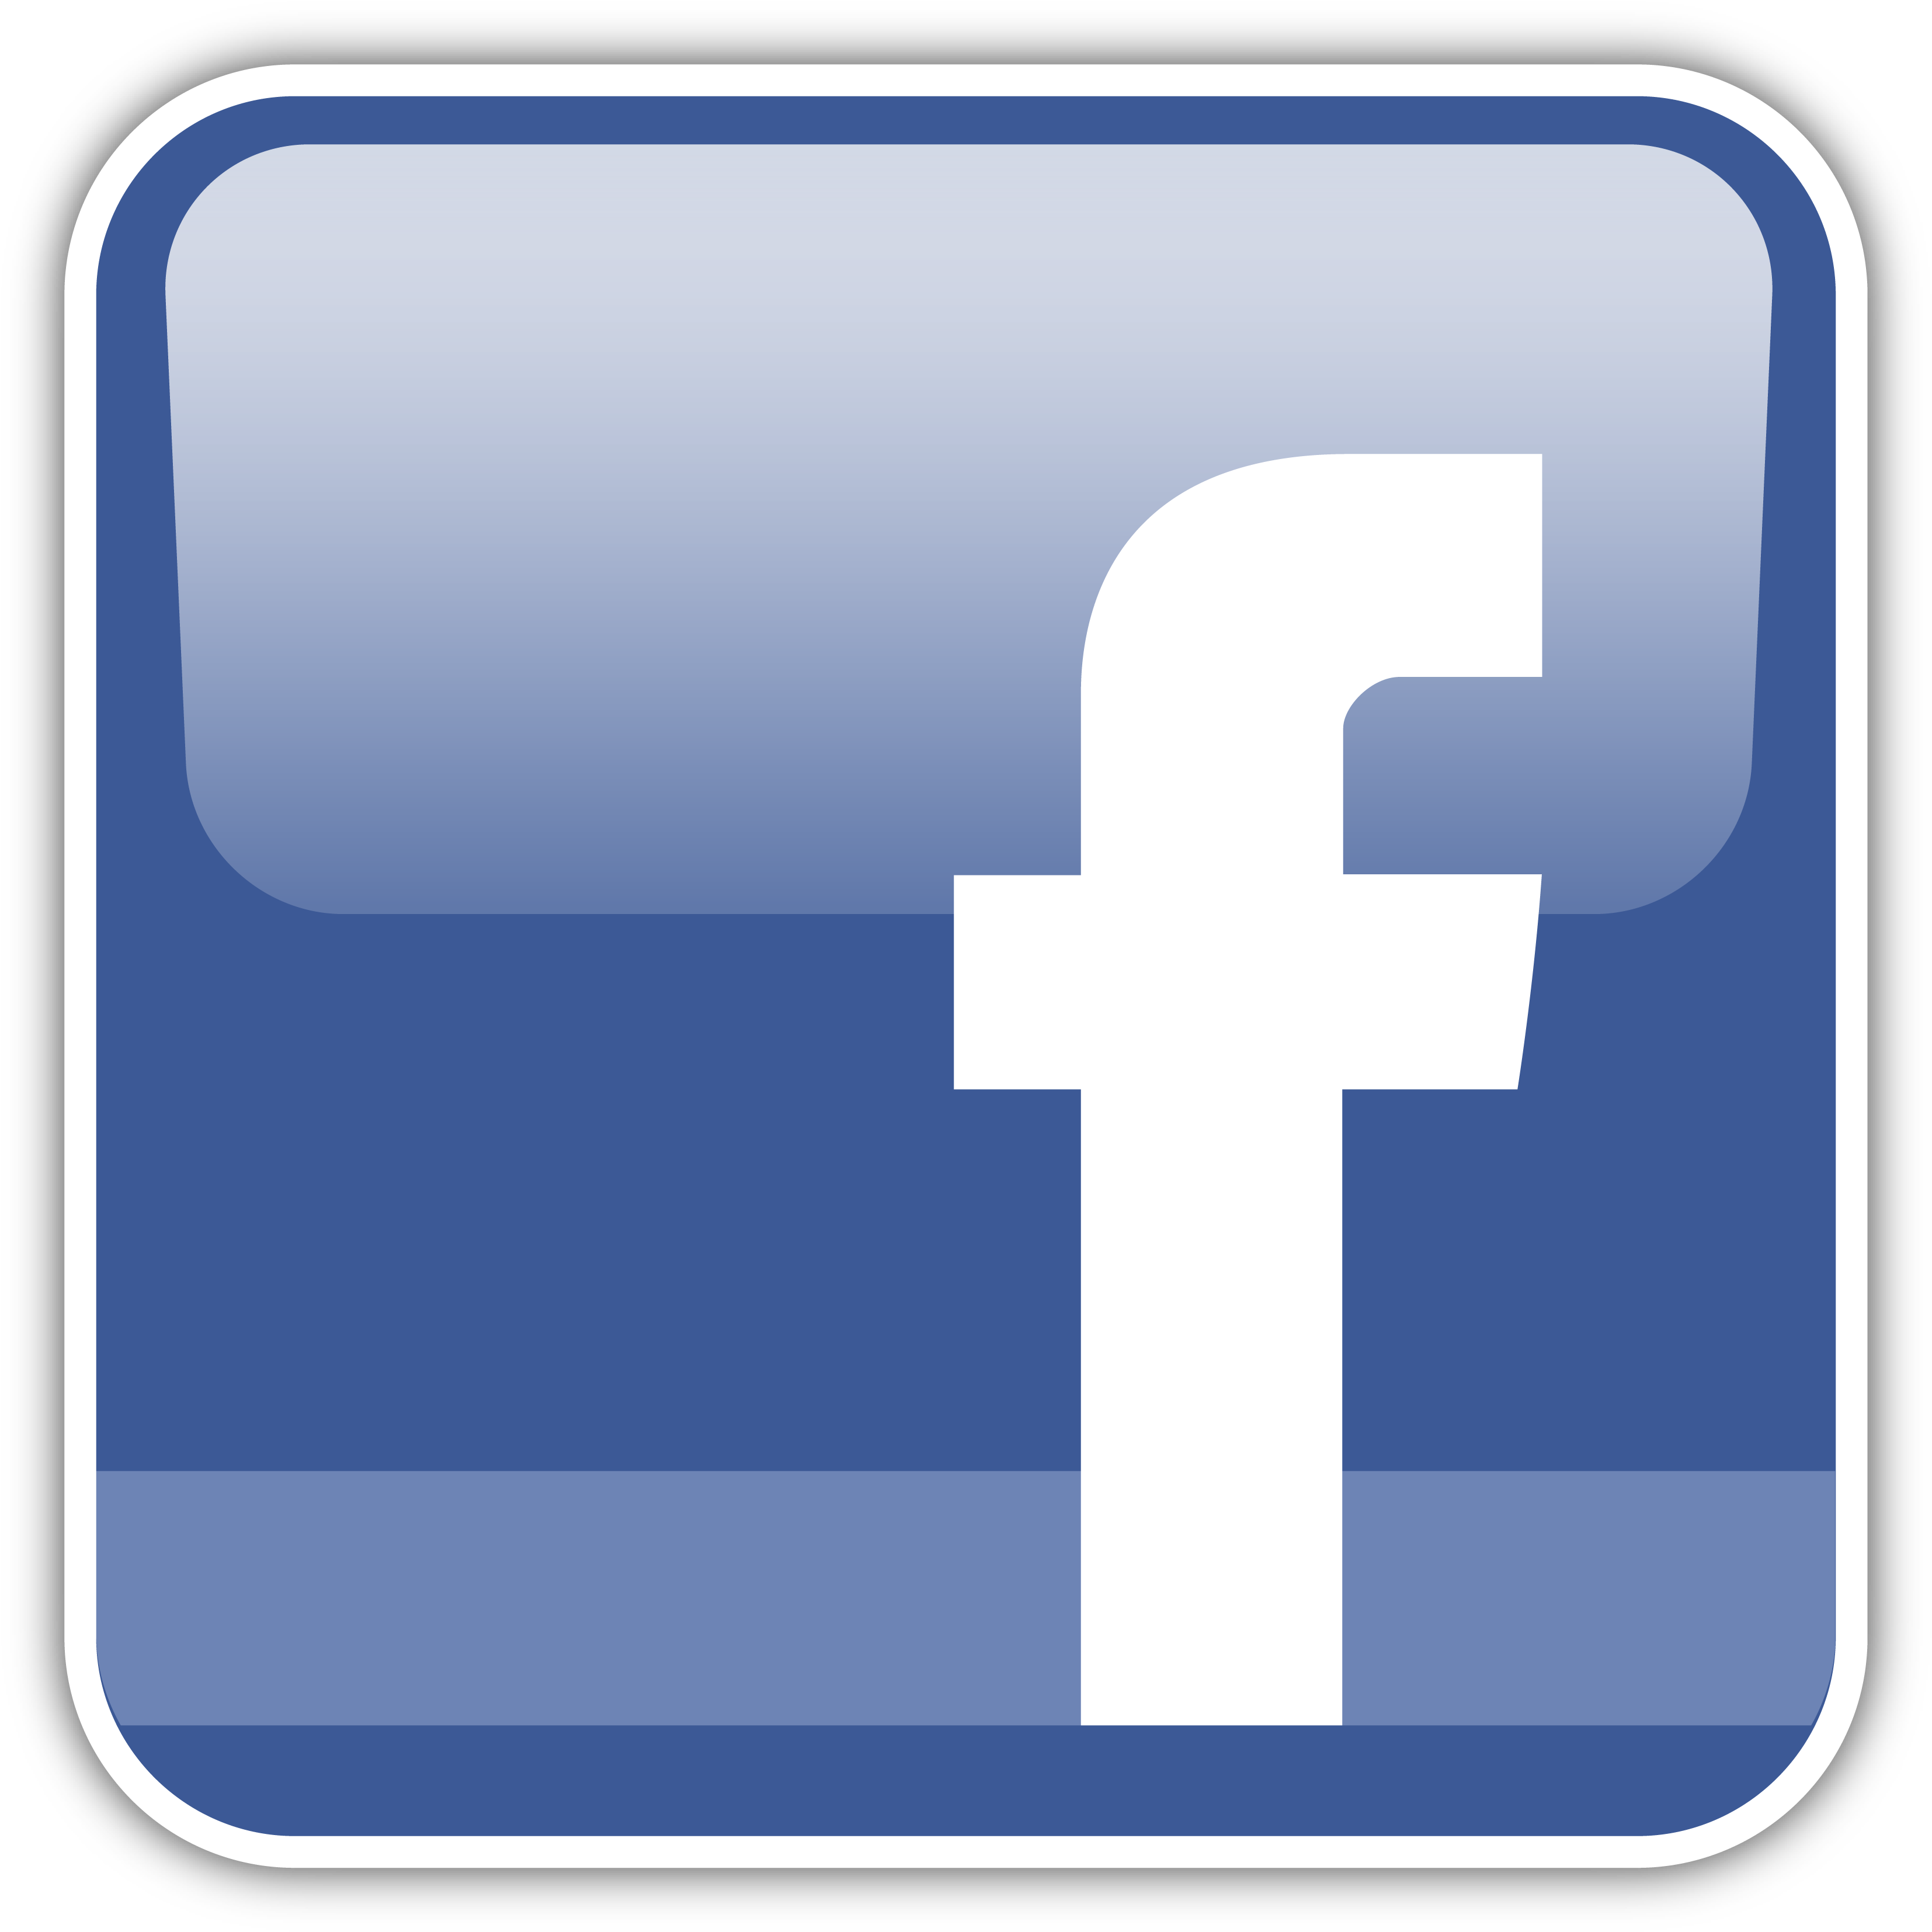 Facebook Button For Email Signature Download - Social Media Symbols Facebook (3333x3333)